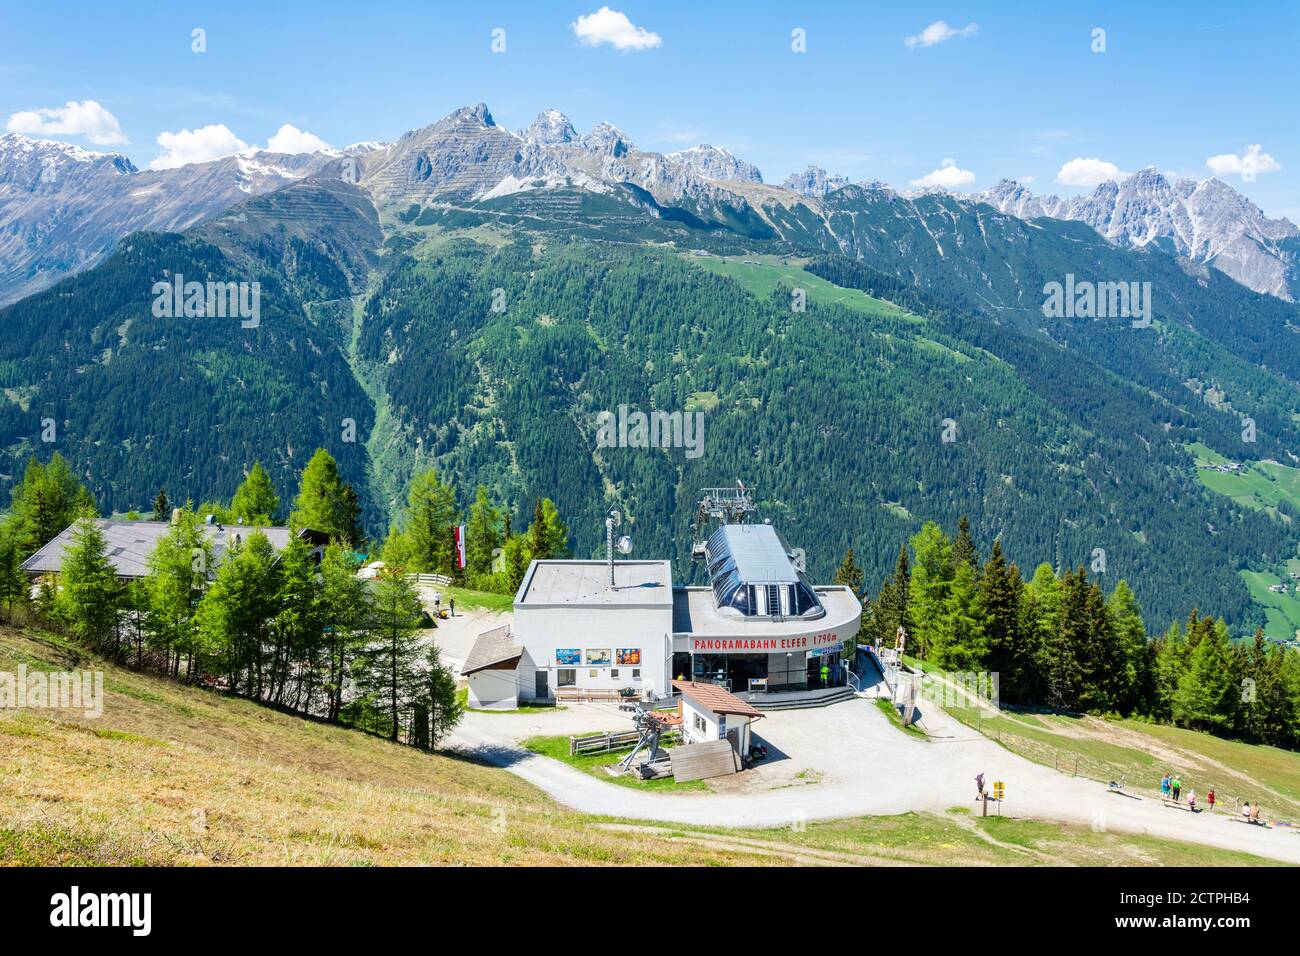 Neustift im Stubaital, Austria – May 28, 2017. Mountain station of Panoramabahn Elfer cable car in Stubaital valley in Tirol, Austria. Stock Photo